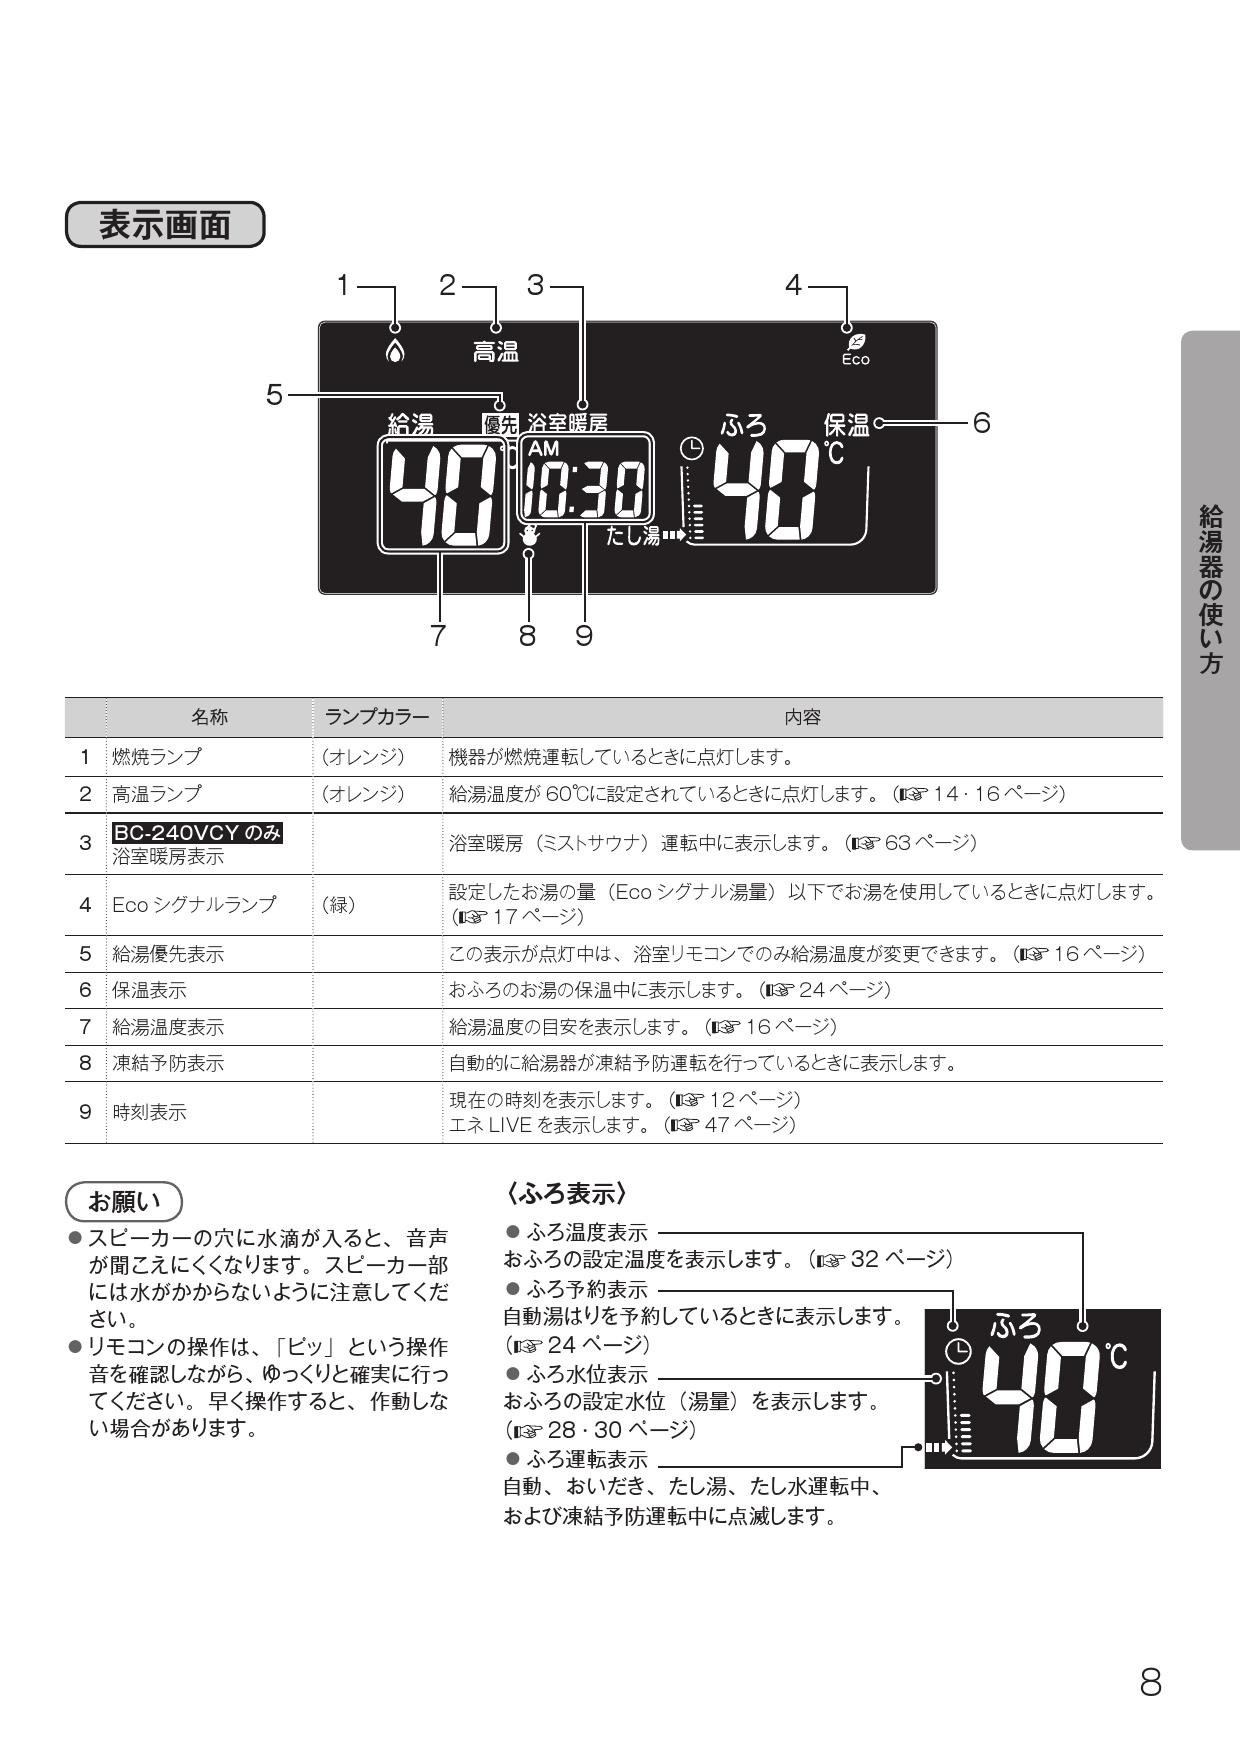 81%OFF!】 Rinnai 風呂リモコン BC-240V